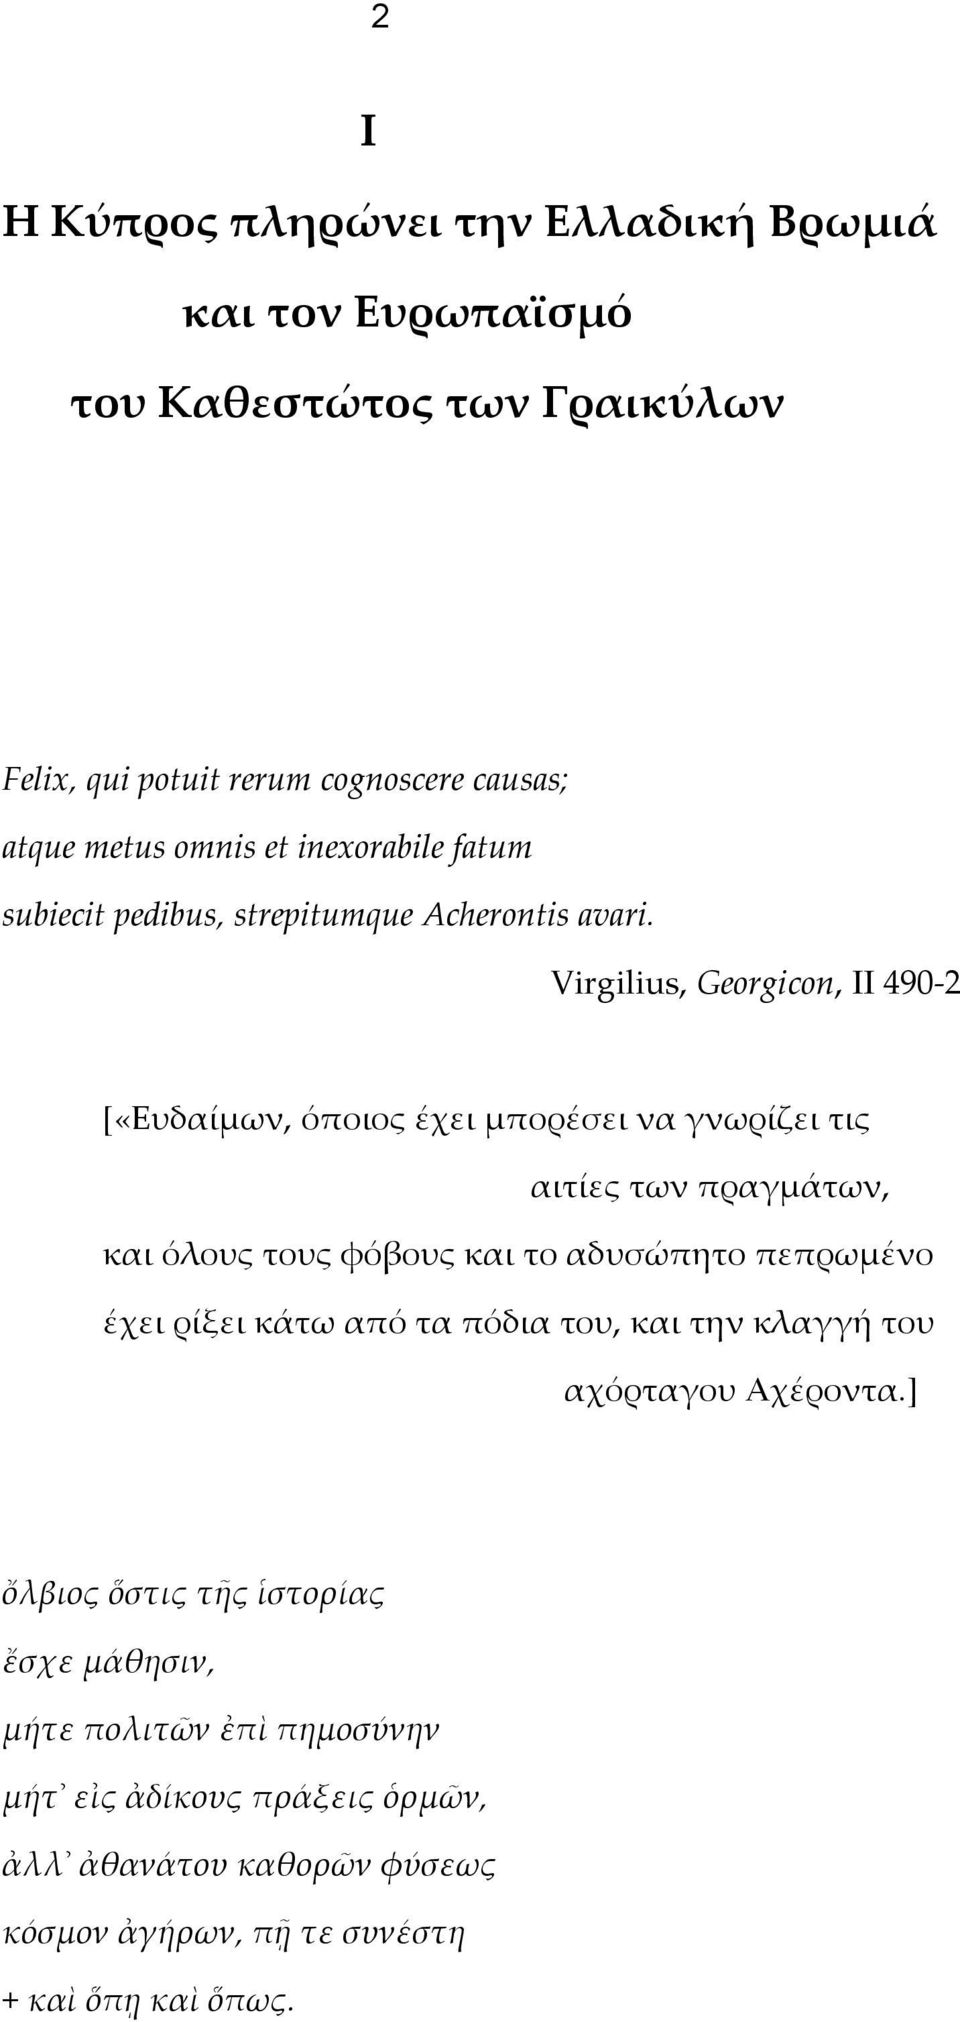 Virgilius, Georgicon, II 490-2 [«Ευδαίμων, όποιος έχει μπορέσει να γνωρίζει τις αιτίες των πραγμάτων, και όλους τους φόβους και το αδυσώπητο πεπρωμένο